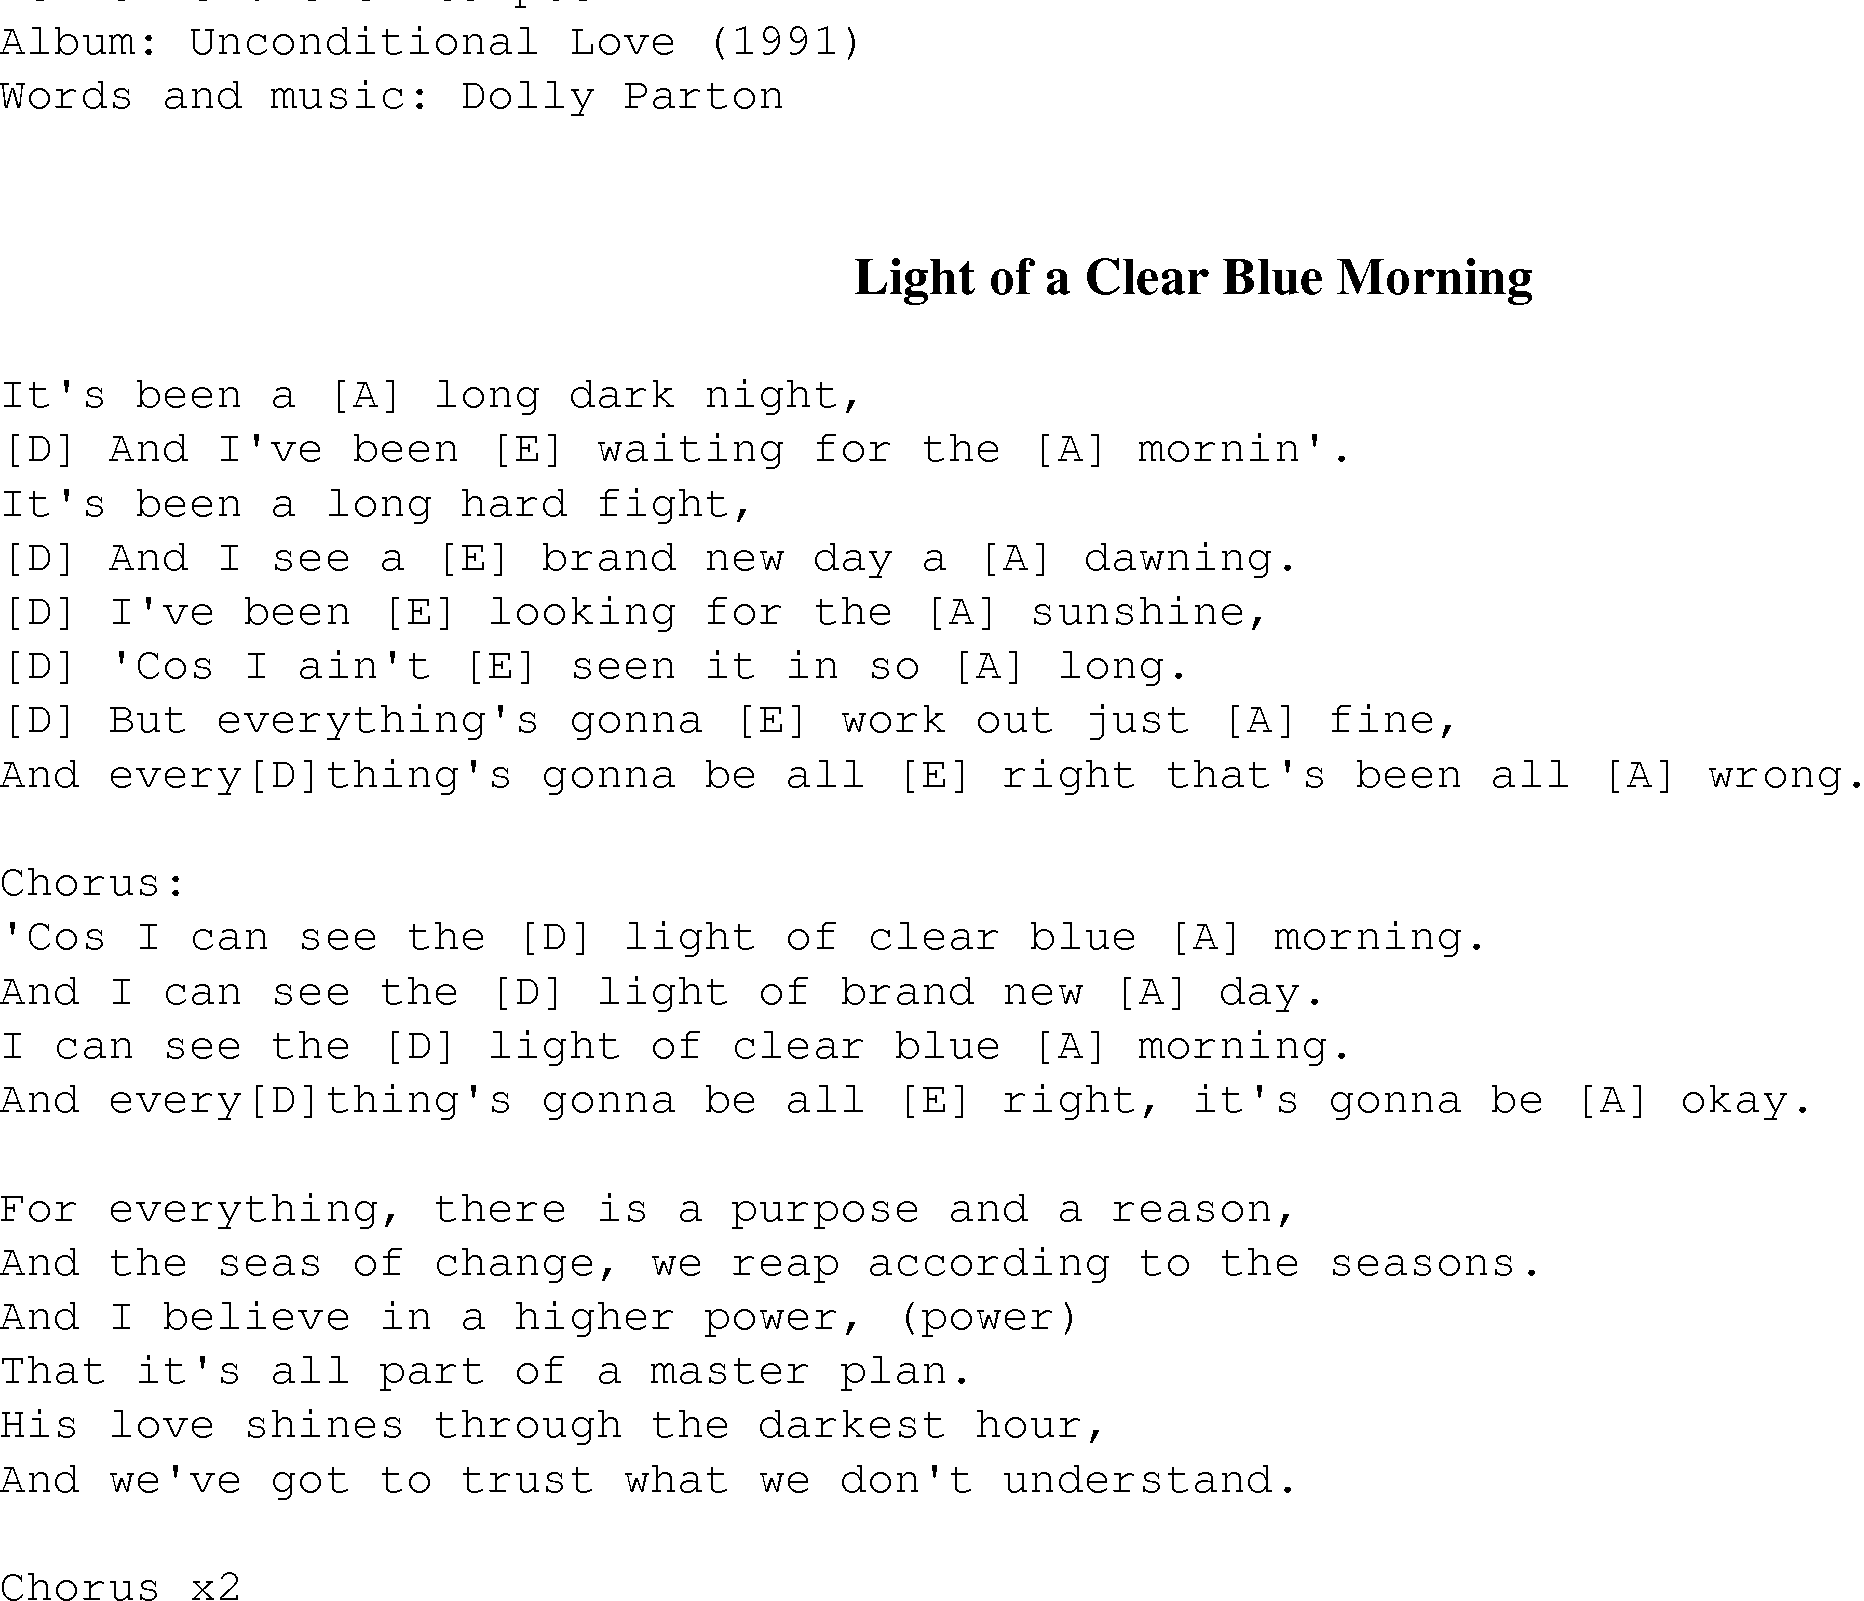 Gospel Song: light_of_a_clear_blue_morn, lyrics and chords.